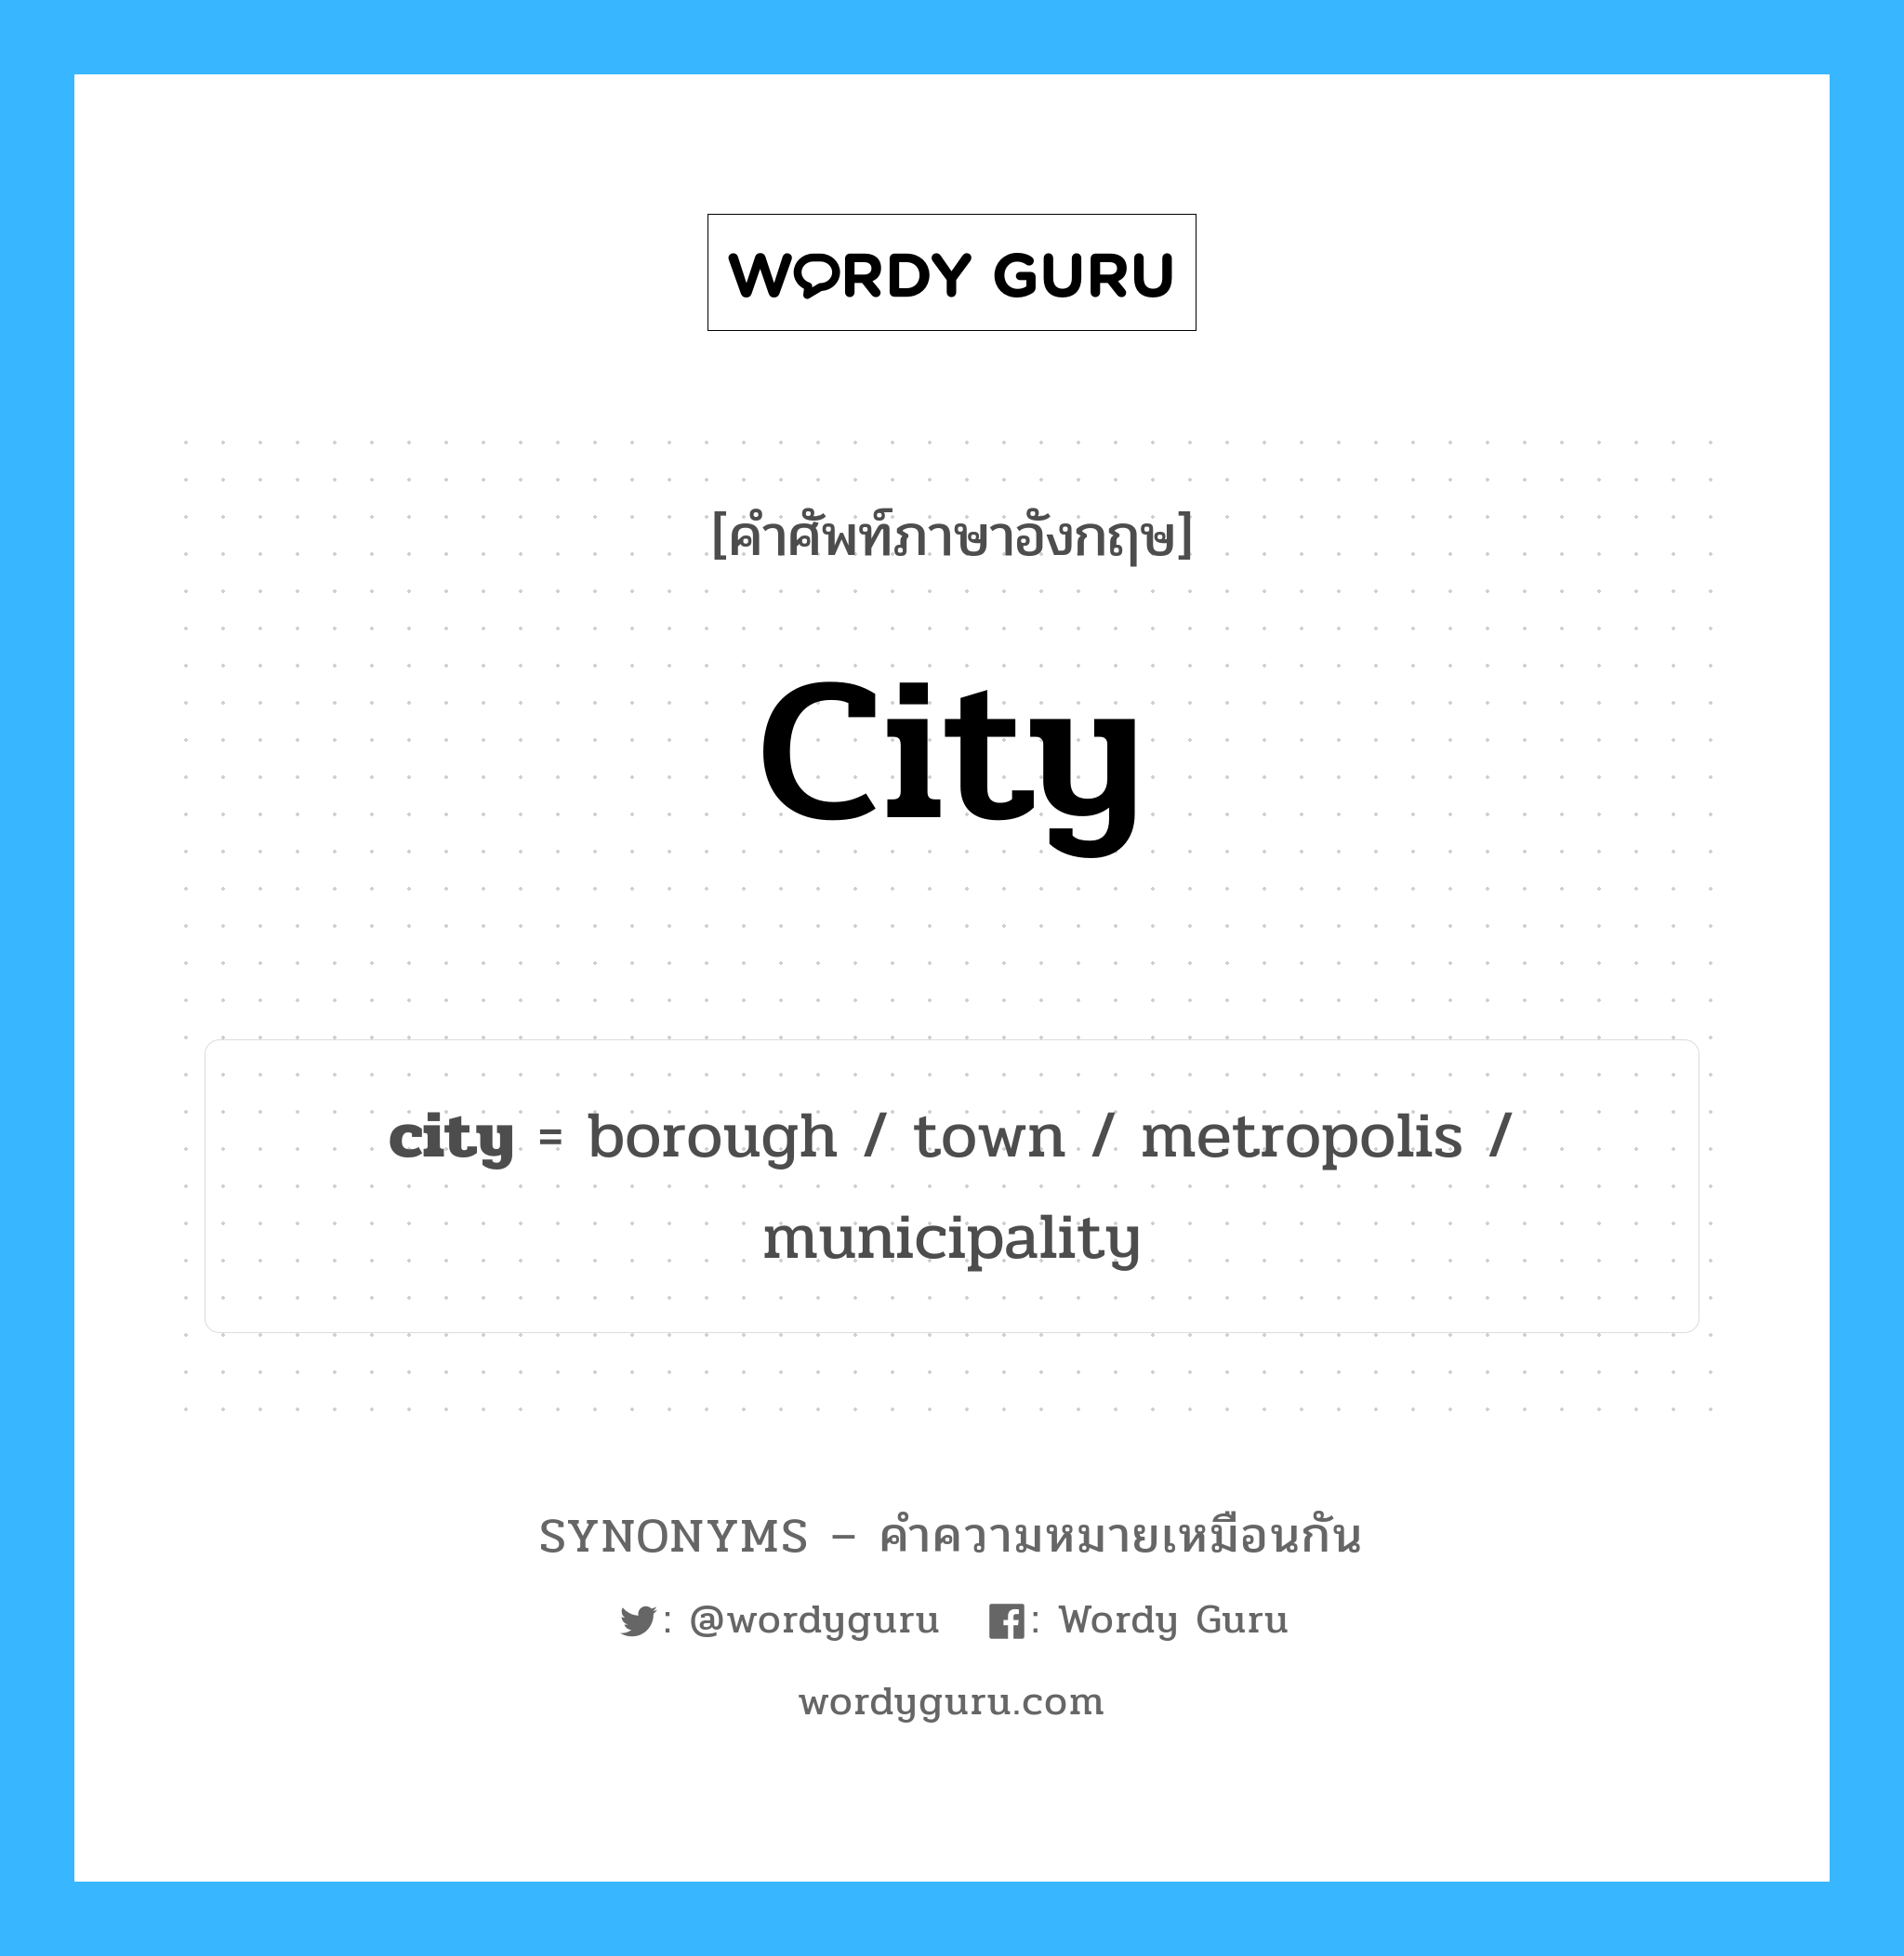 municipality เป็นหนึ่งใน city และมีคำอื่น ๆ อีกดังนี้, คำศัพท์ภาษาอังกฤษ municipality ความหมายคล้ายกันกับ city แปลว่า เทศบาล หมวด city